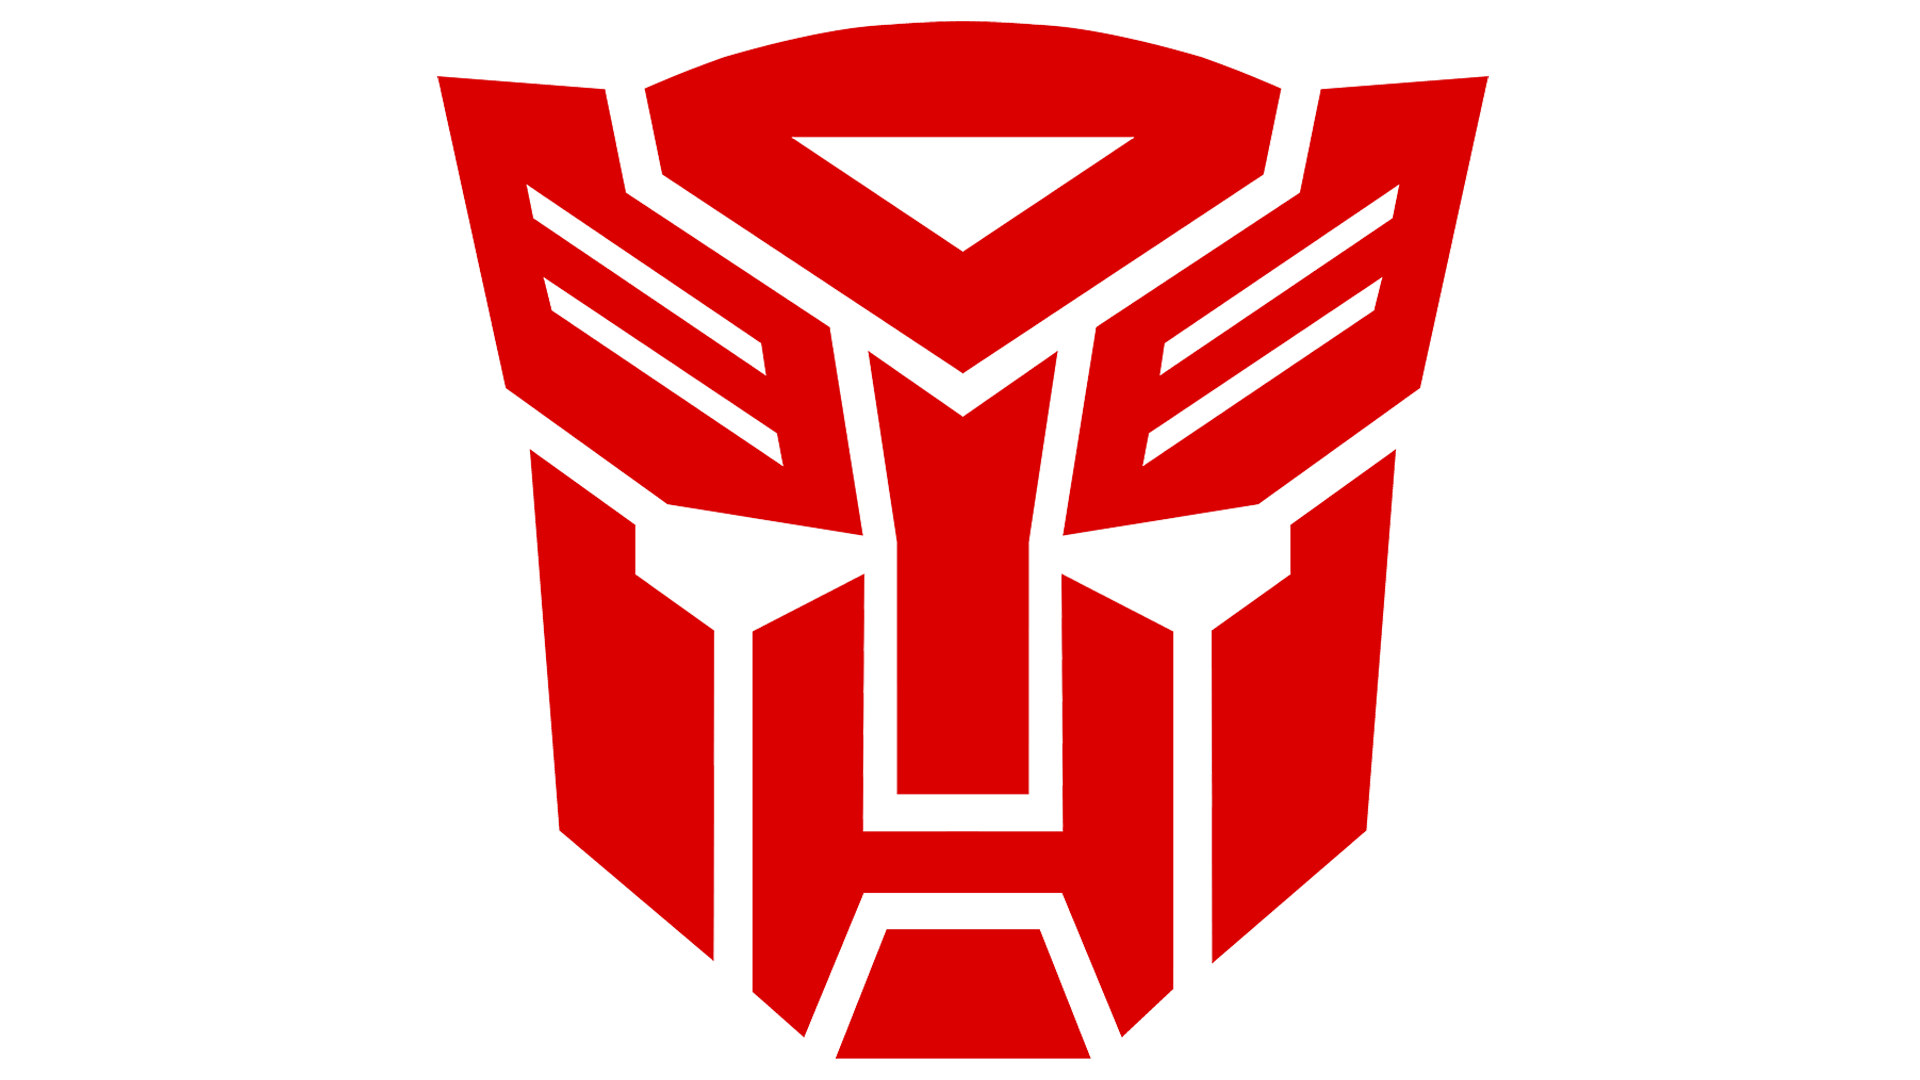 Transformers Autobot Logo - Autobots Logo, Autobots Symbol, Meaning, History and Evolution